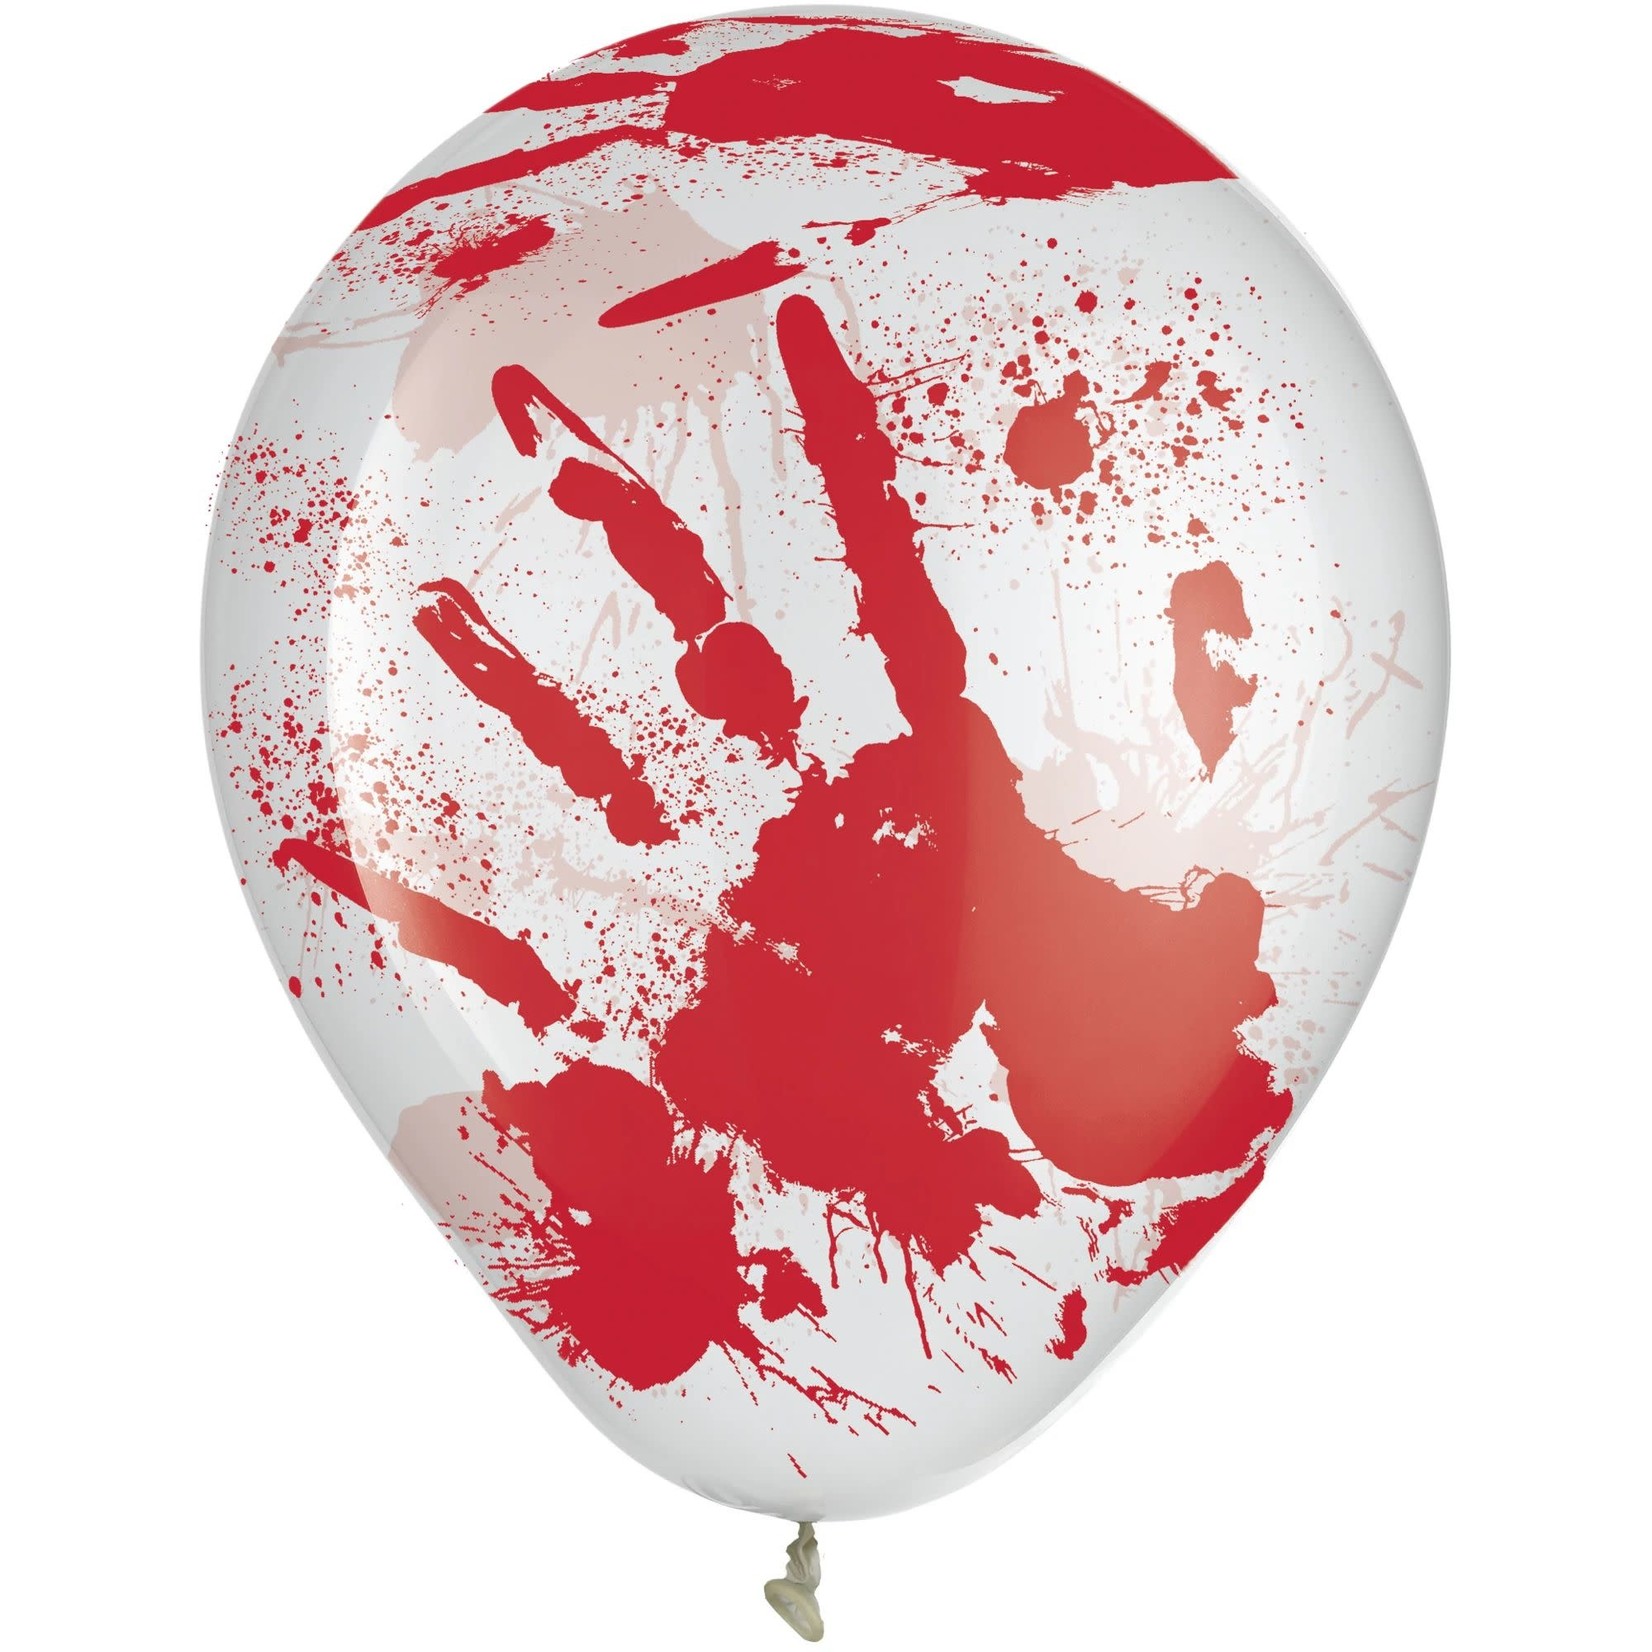 Asylum Printed Latex Balloons - Clear w/Red Blood Splatter